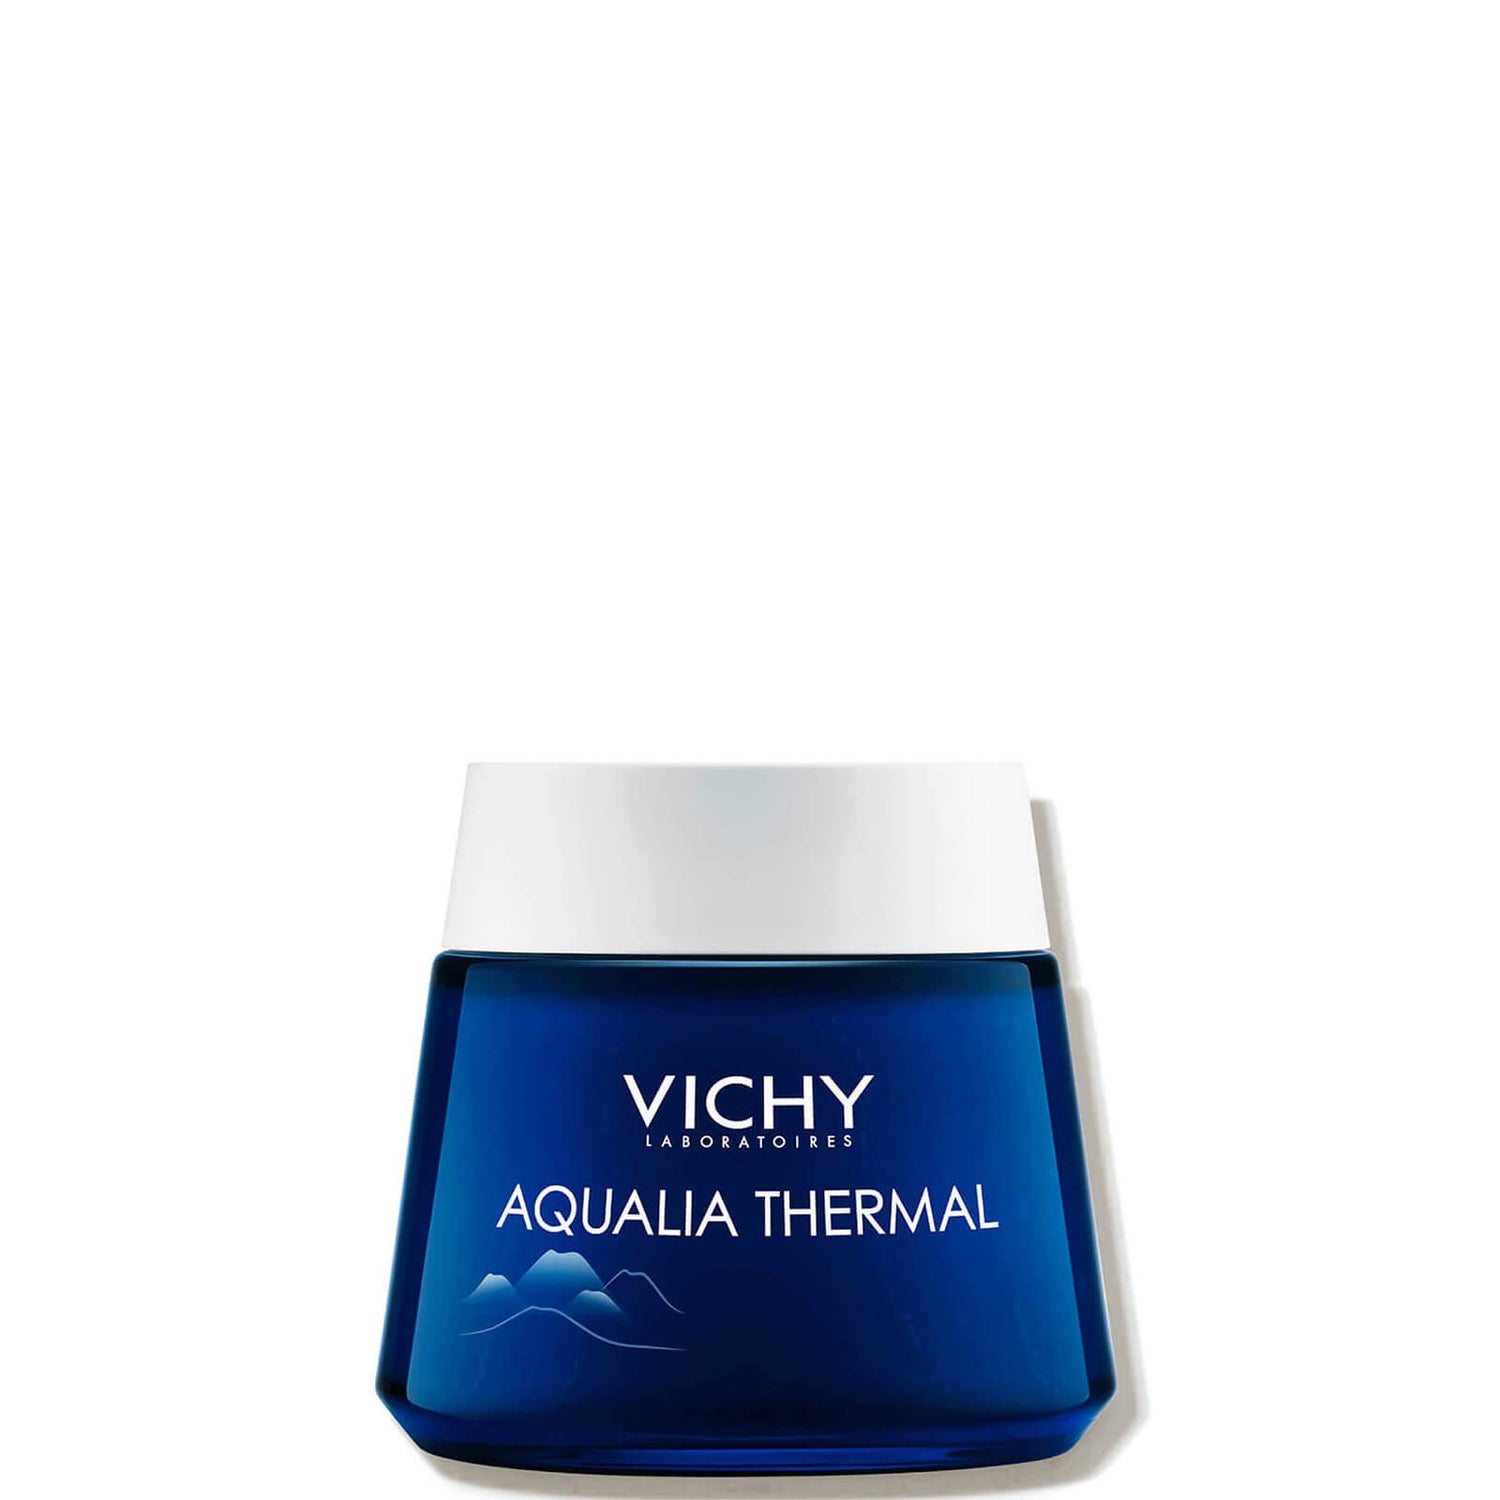 Vichy Aqualia Thermal Night Spa (2.54 fl. oz.)